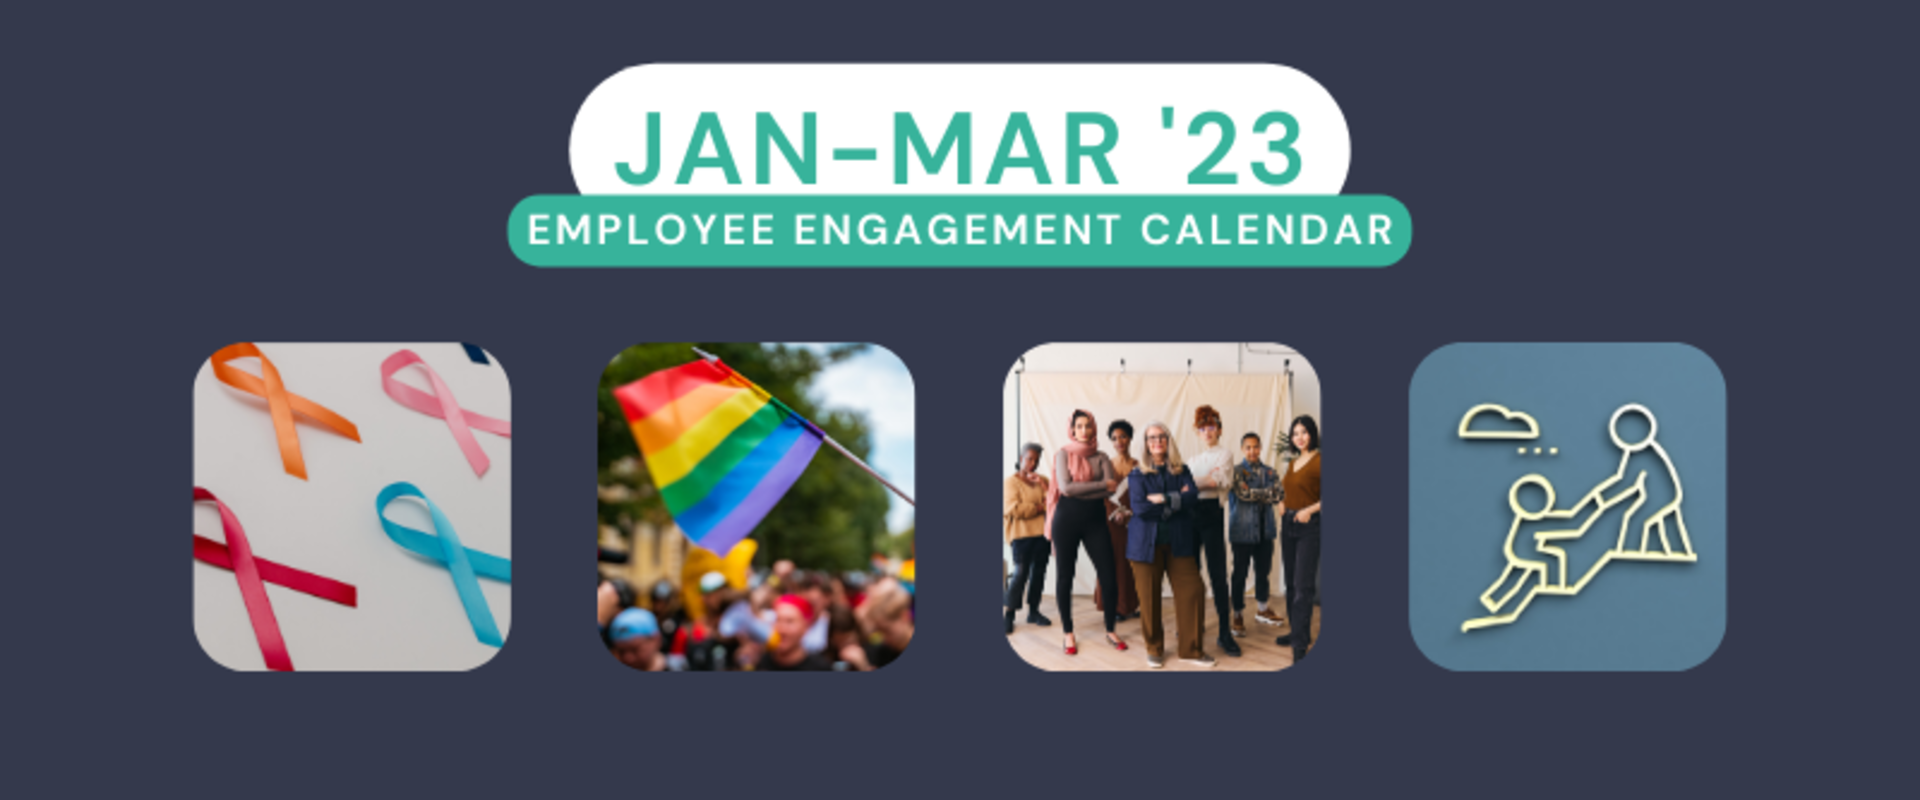 Employee Engagement Calendar - FREE DOWNLOAD (Jan-Mar &#39;23)